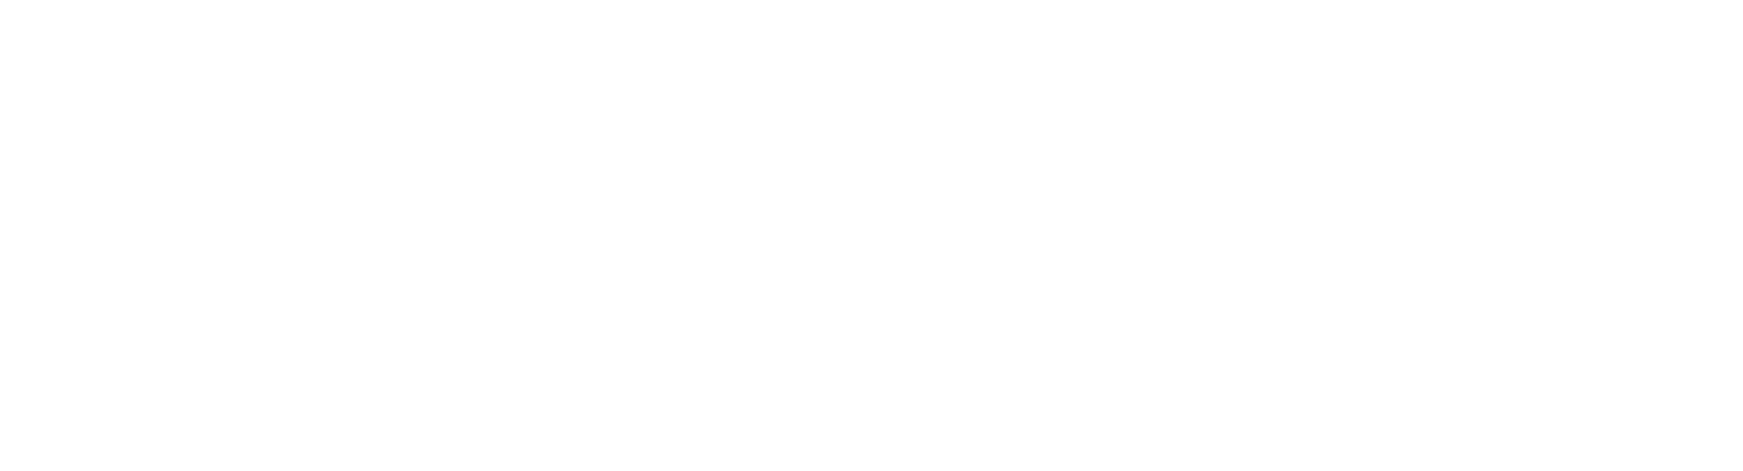 B L A N C O | constructora